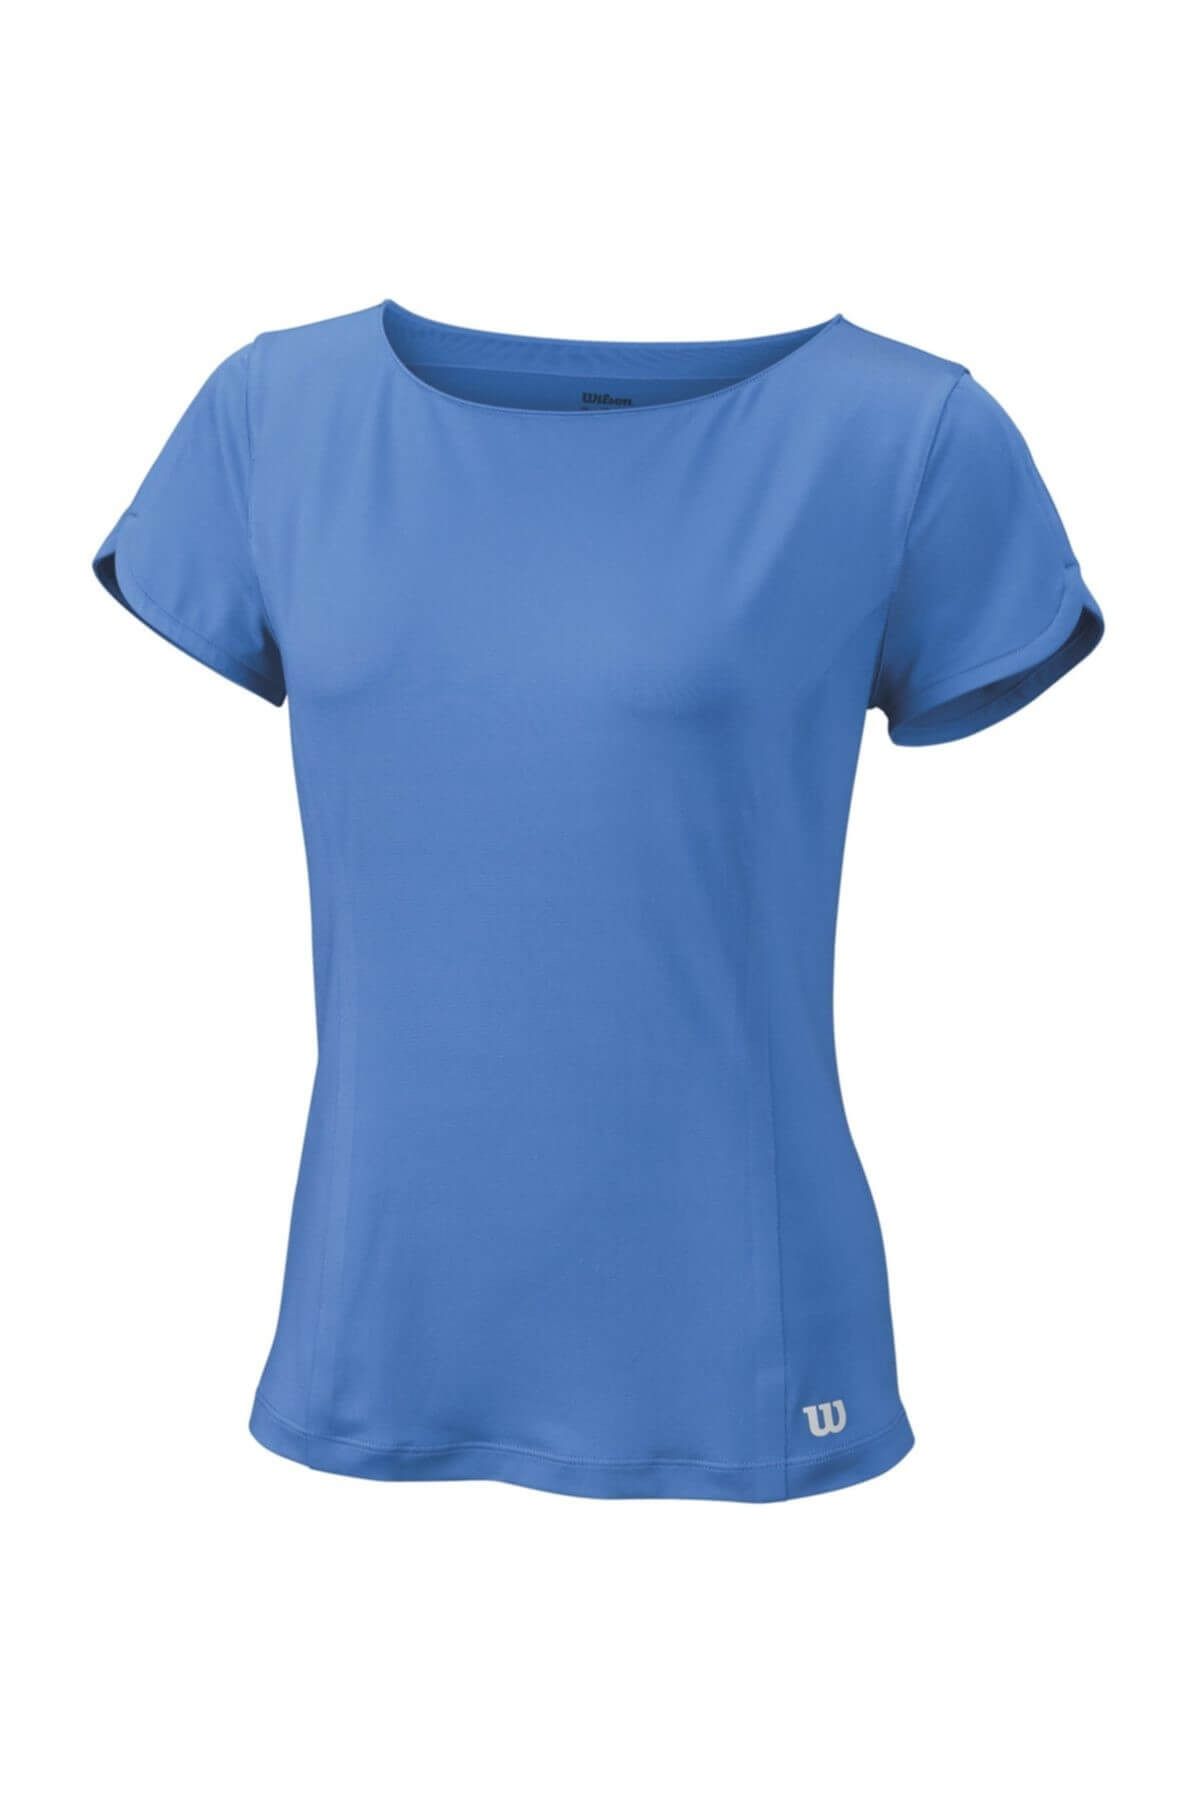 Wilson Kadın T-Shirt Star Crossover Cap Sleeve  Mavi (Regatta)  (